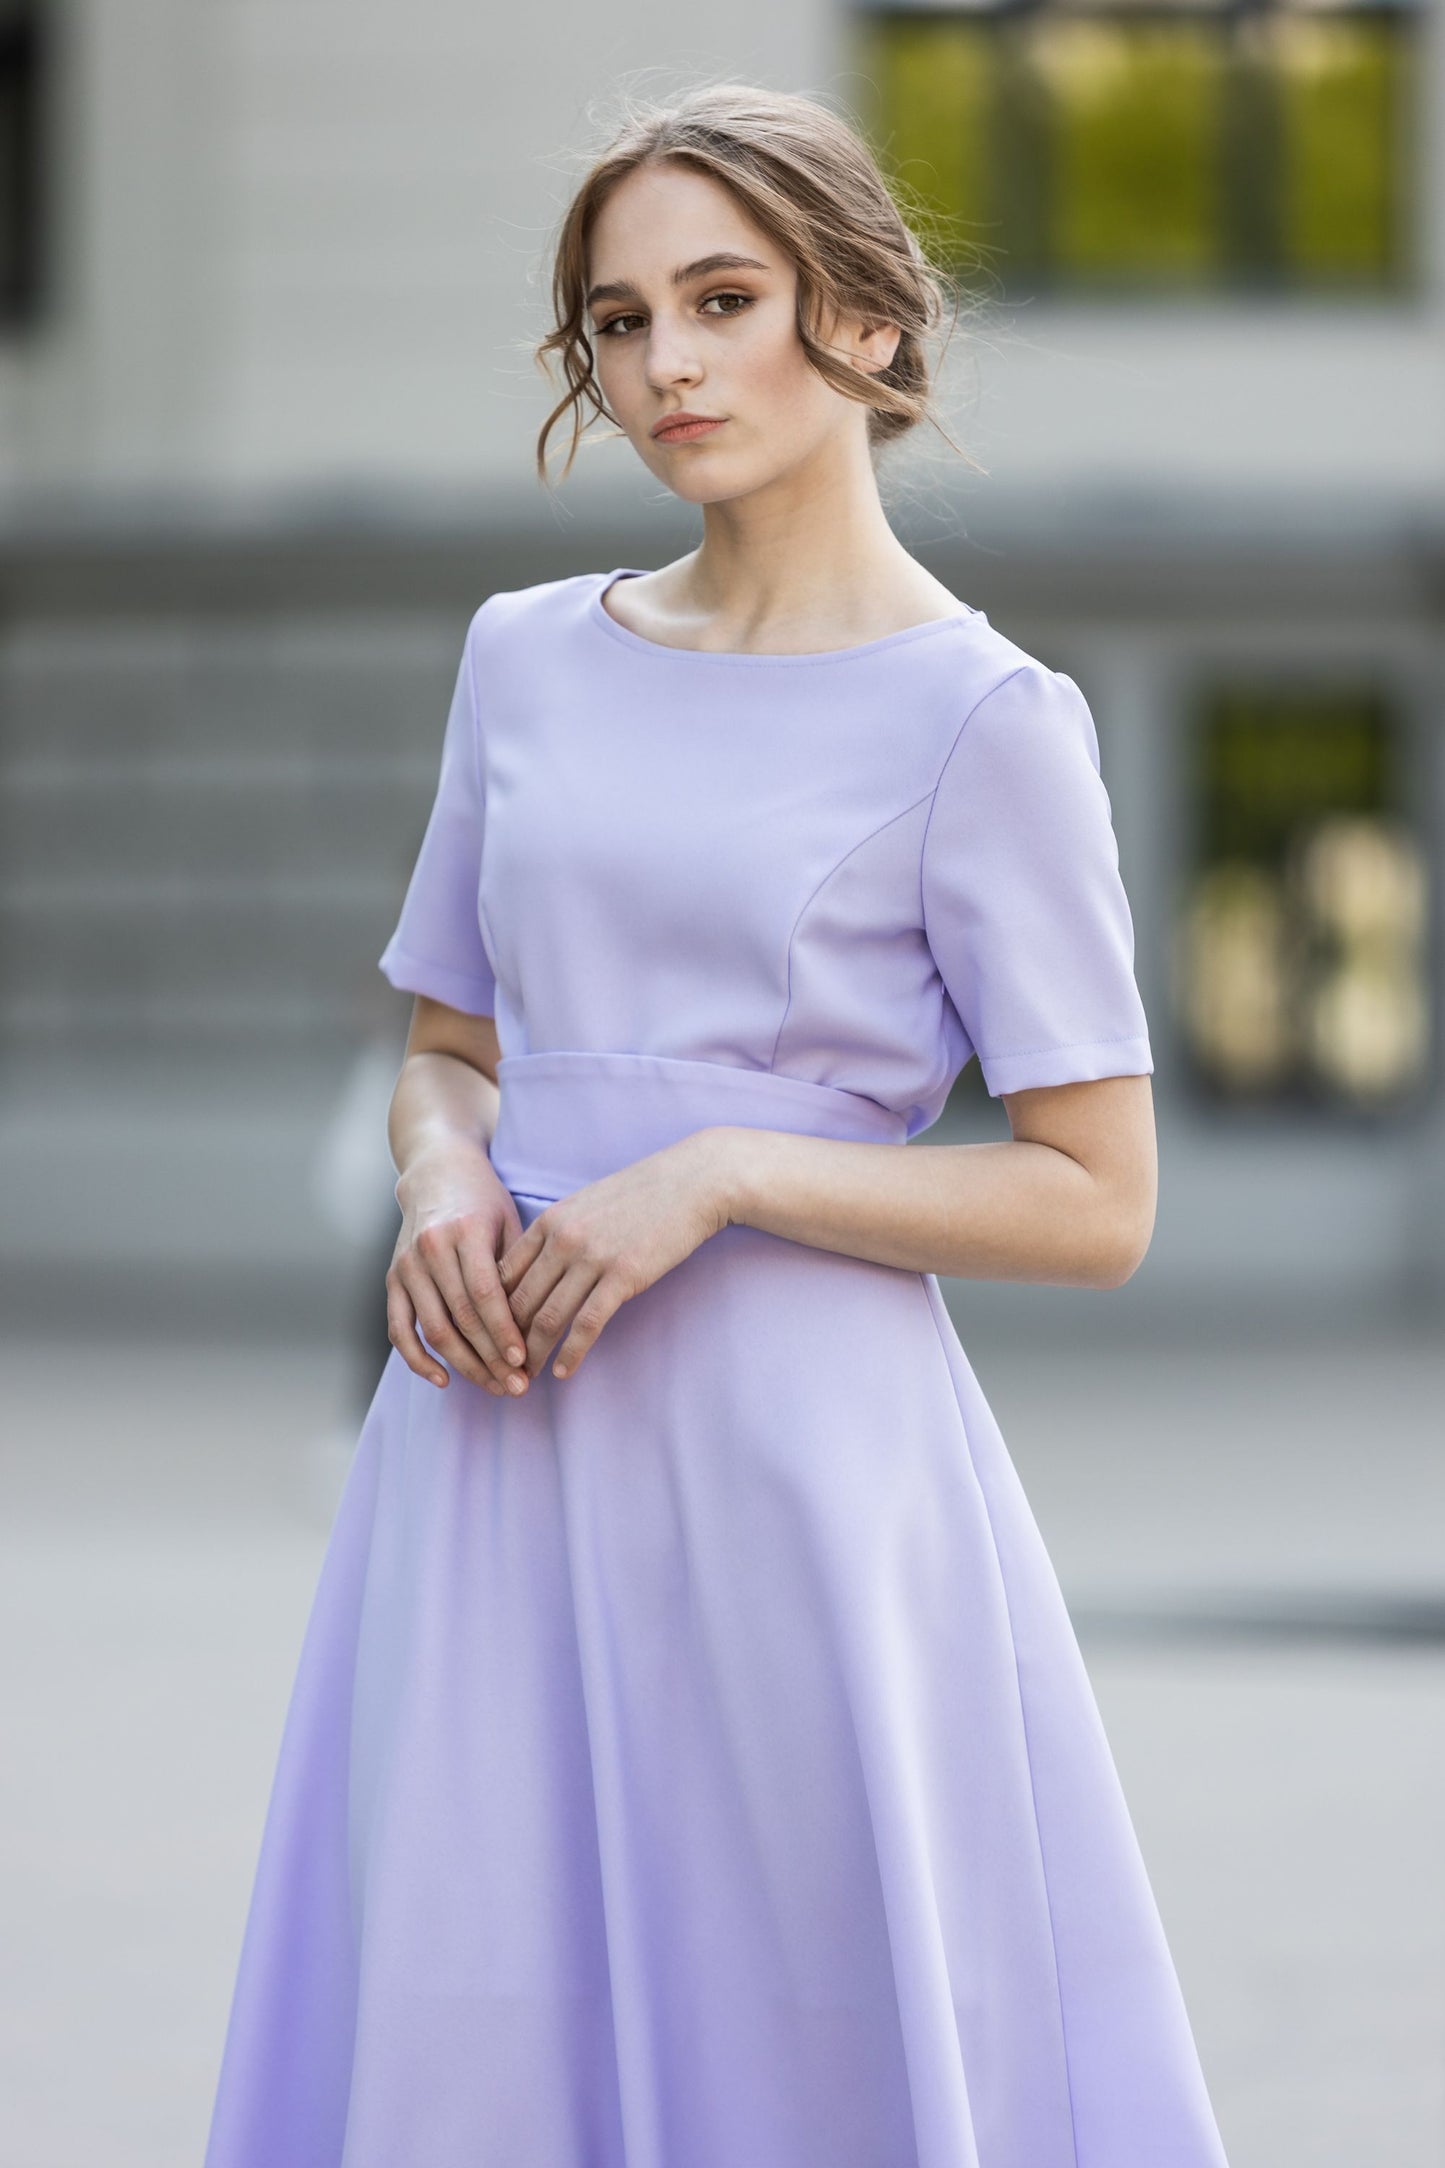 Light Lilac dress with circle skirts